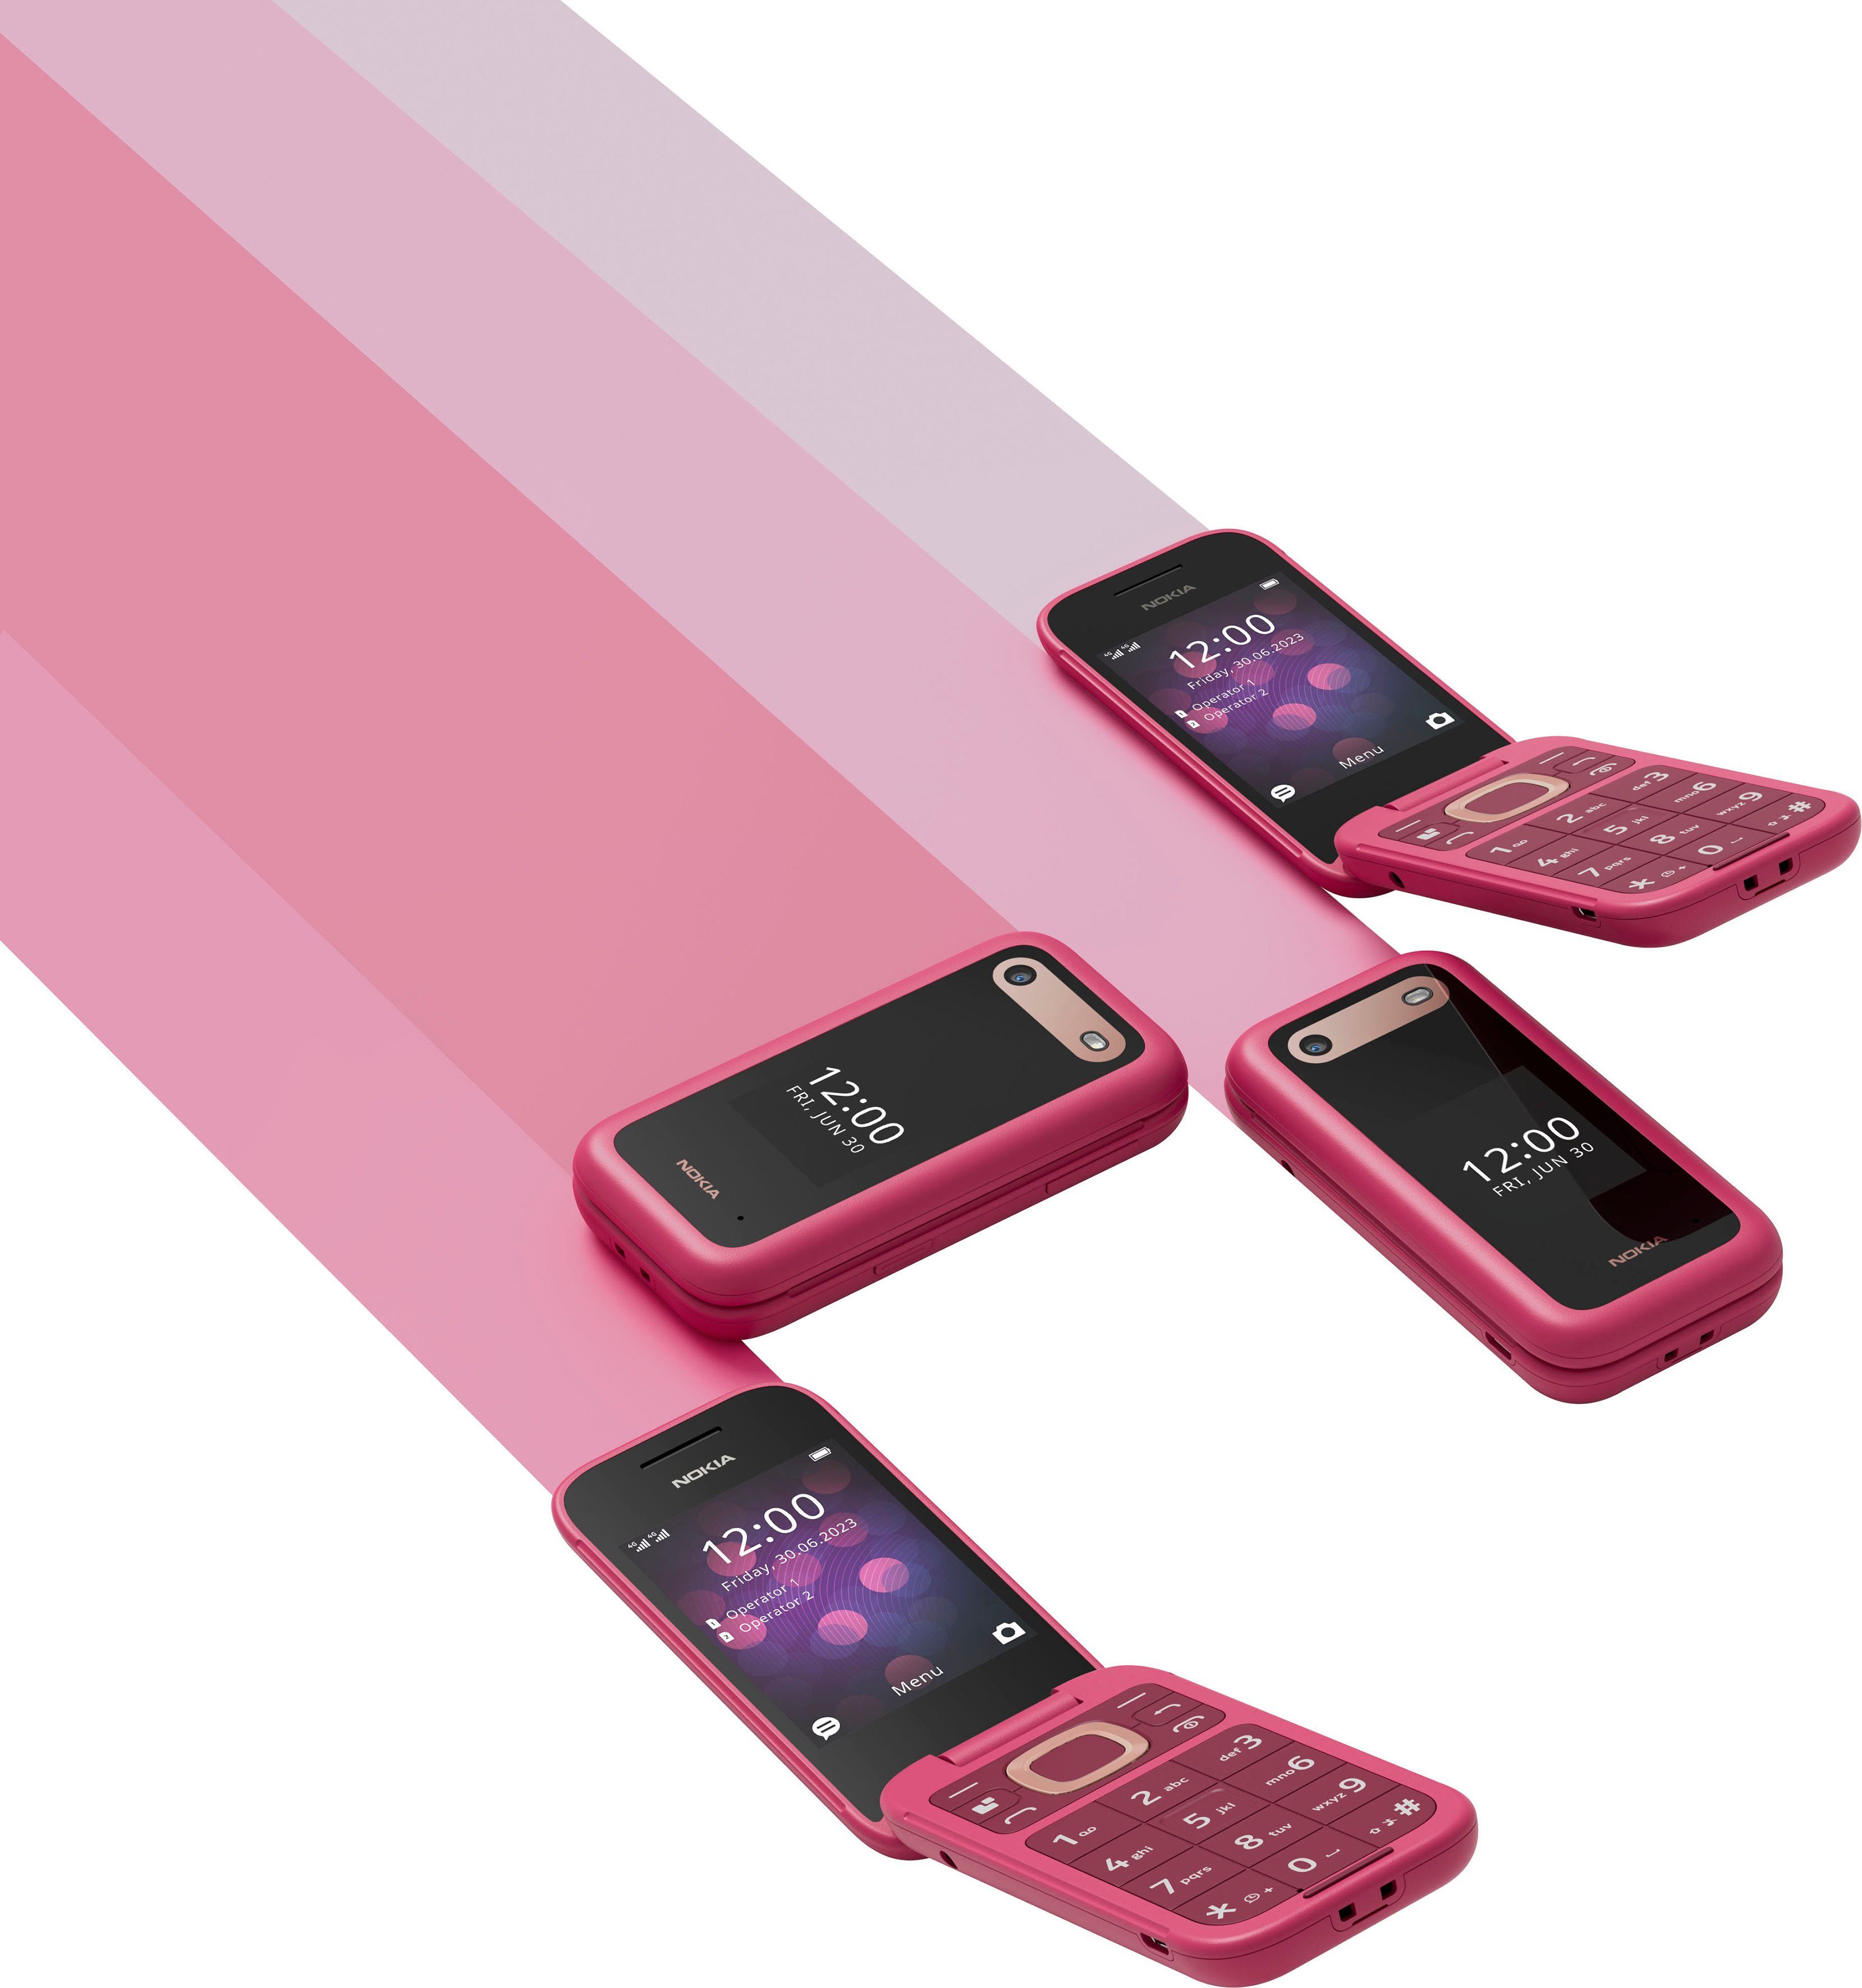 Nokia 2660 Flip Klapphandy 0,13 Speicherplatz, (7,11 Zoll, 0,3 Kamera) GB cm/2,8 rosa MP